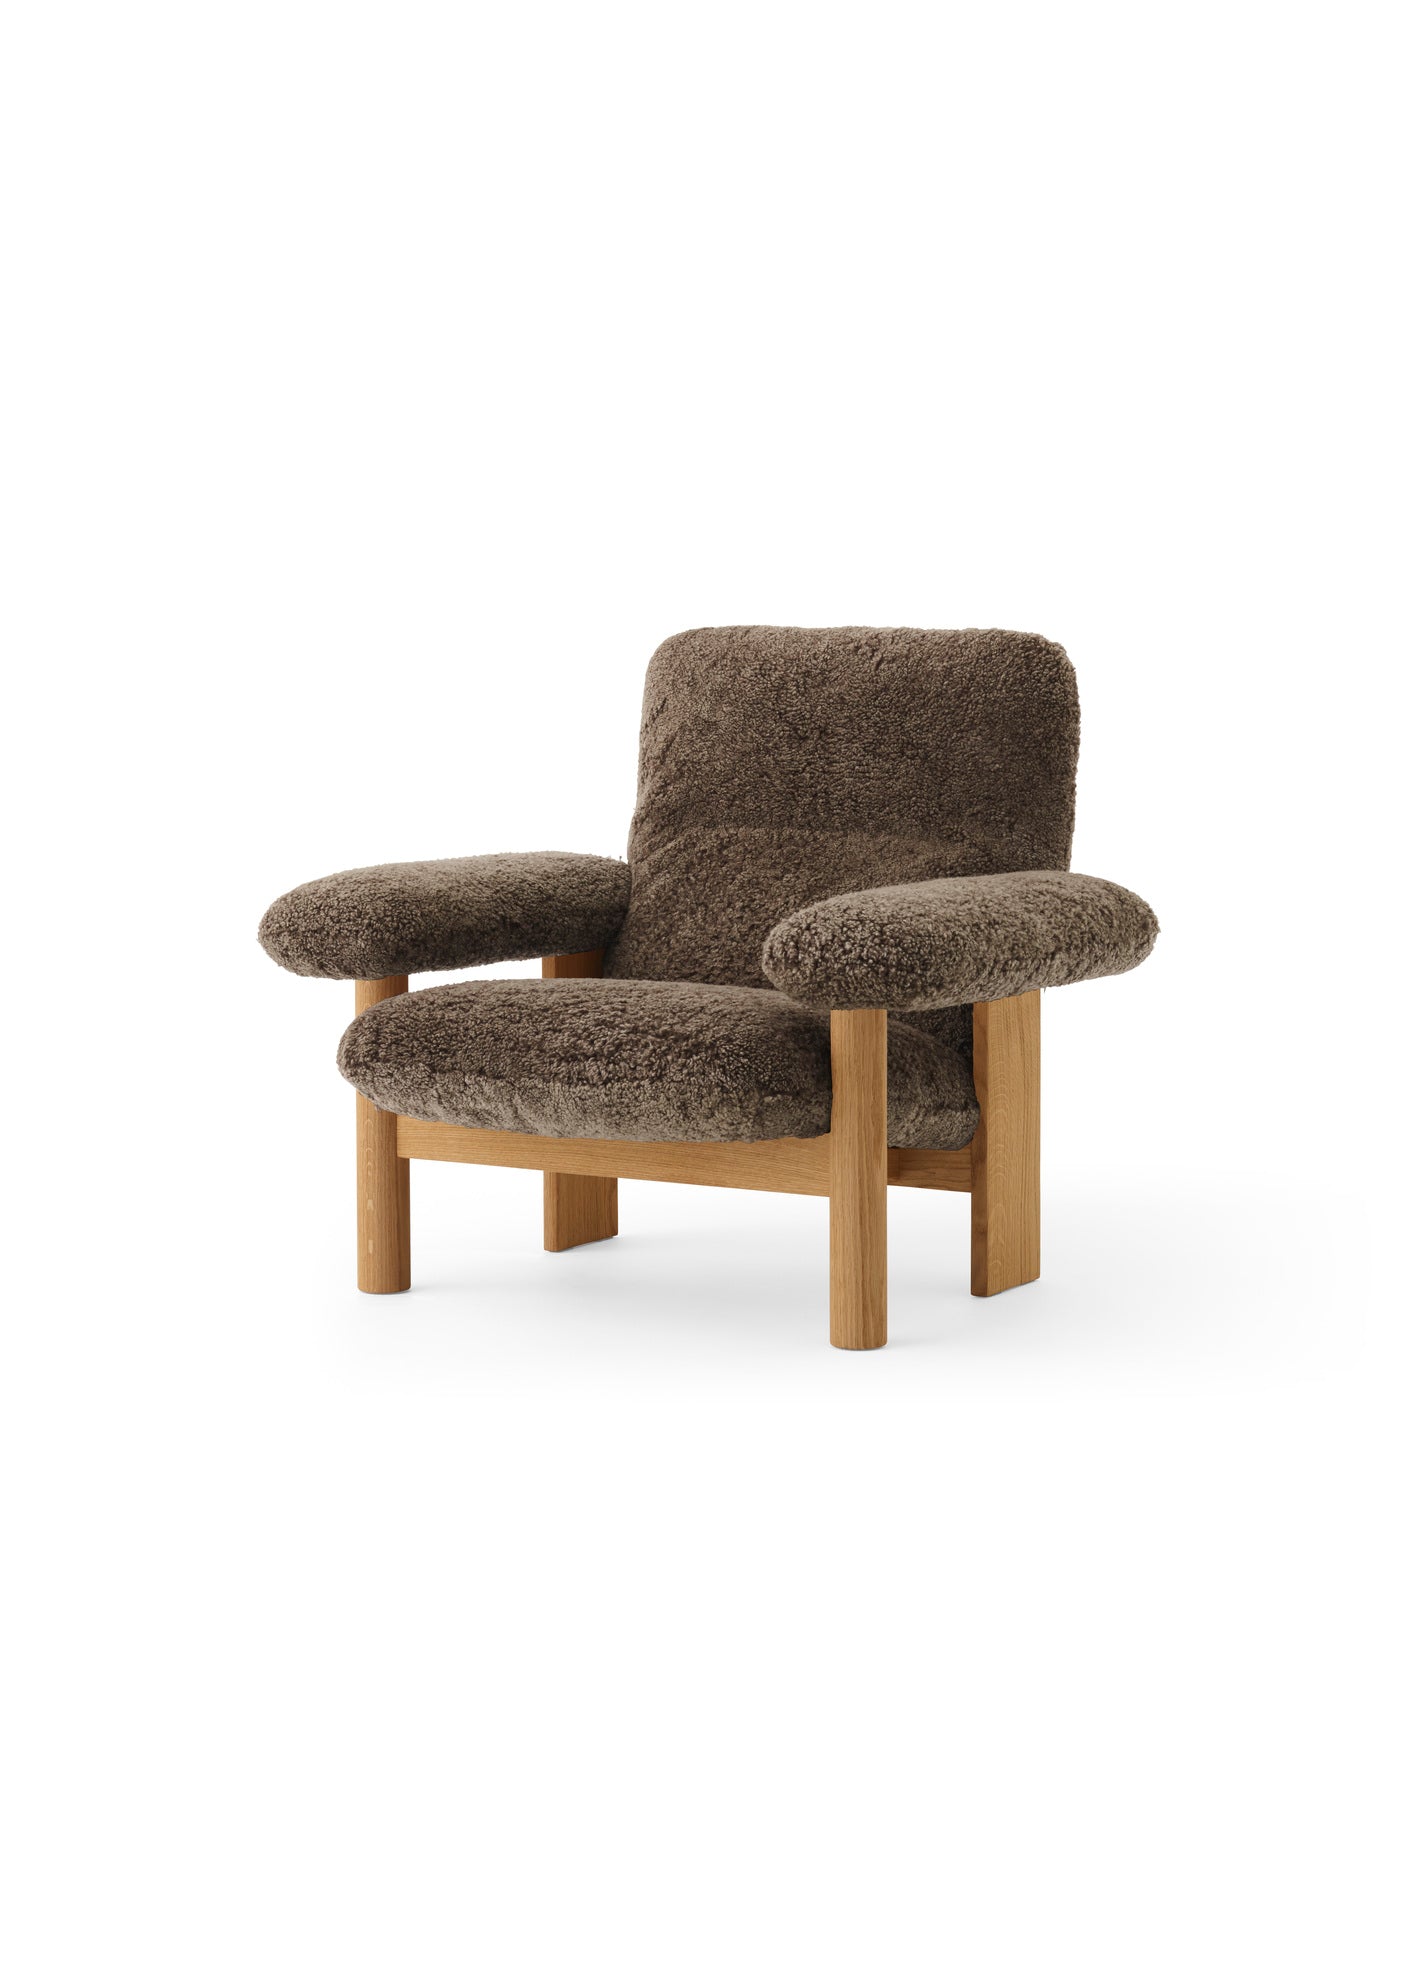 Brasilia lounge chair sheepskin root, oak